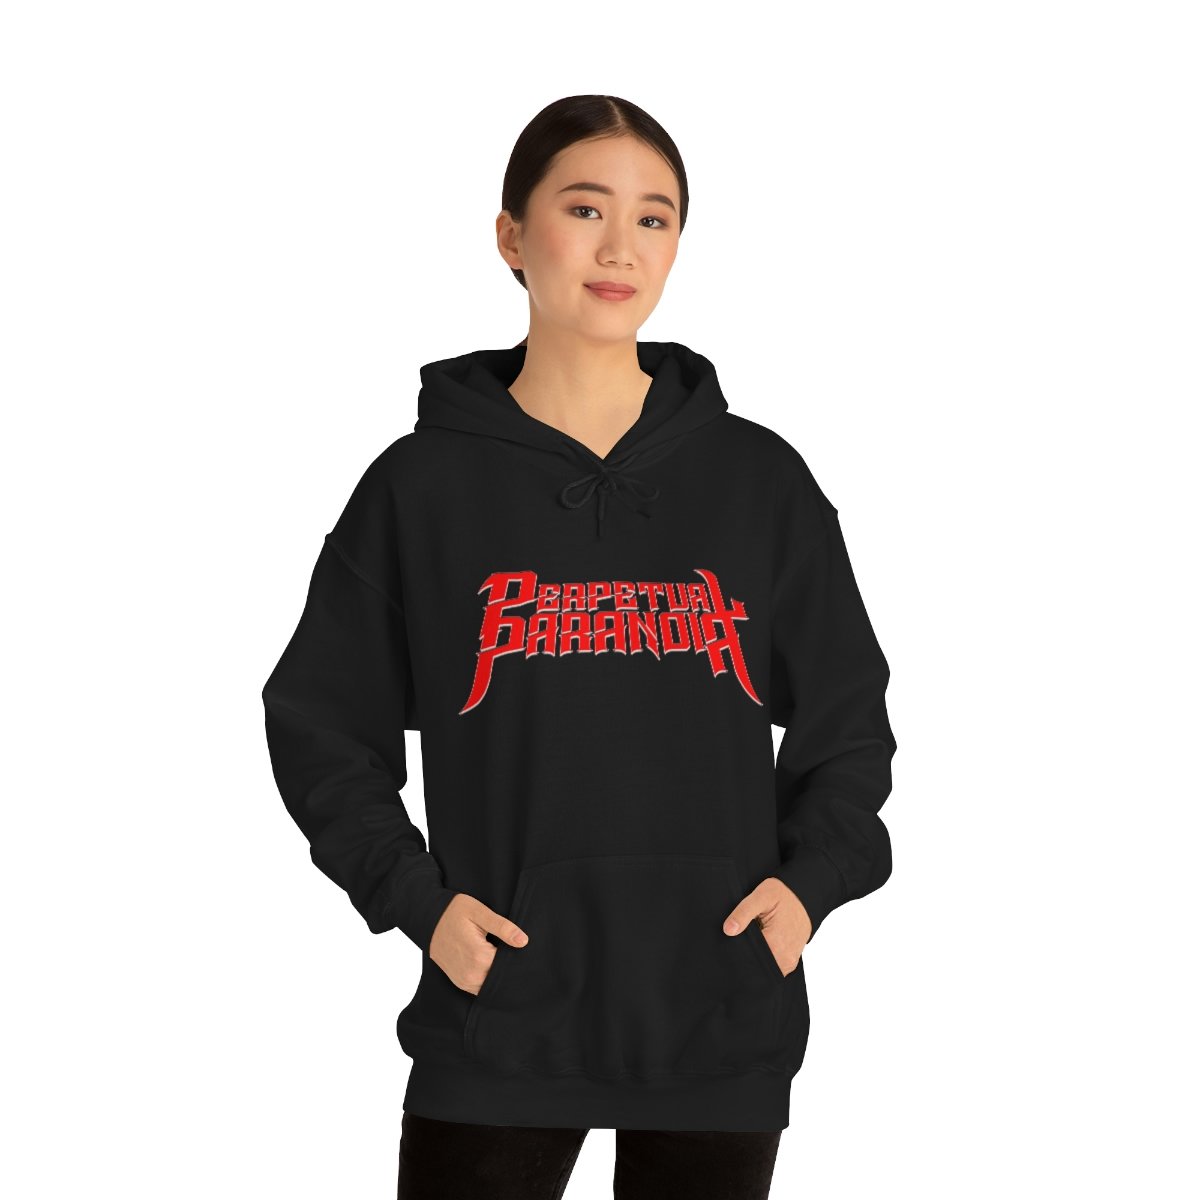 Perpetual Paranoia Between Logo Pullover Hooded Sweatshirt